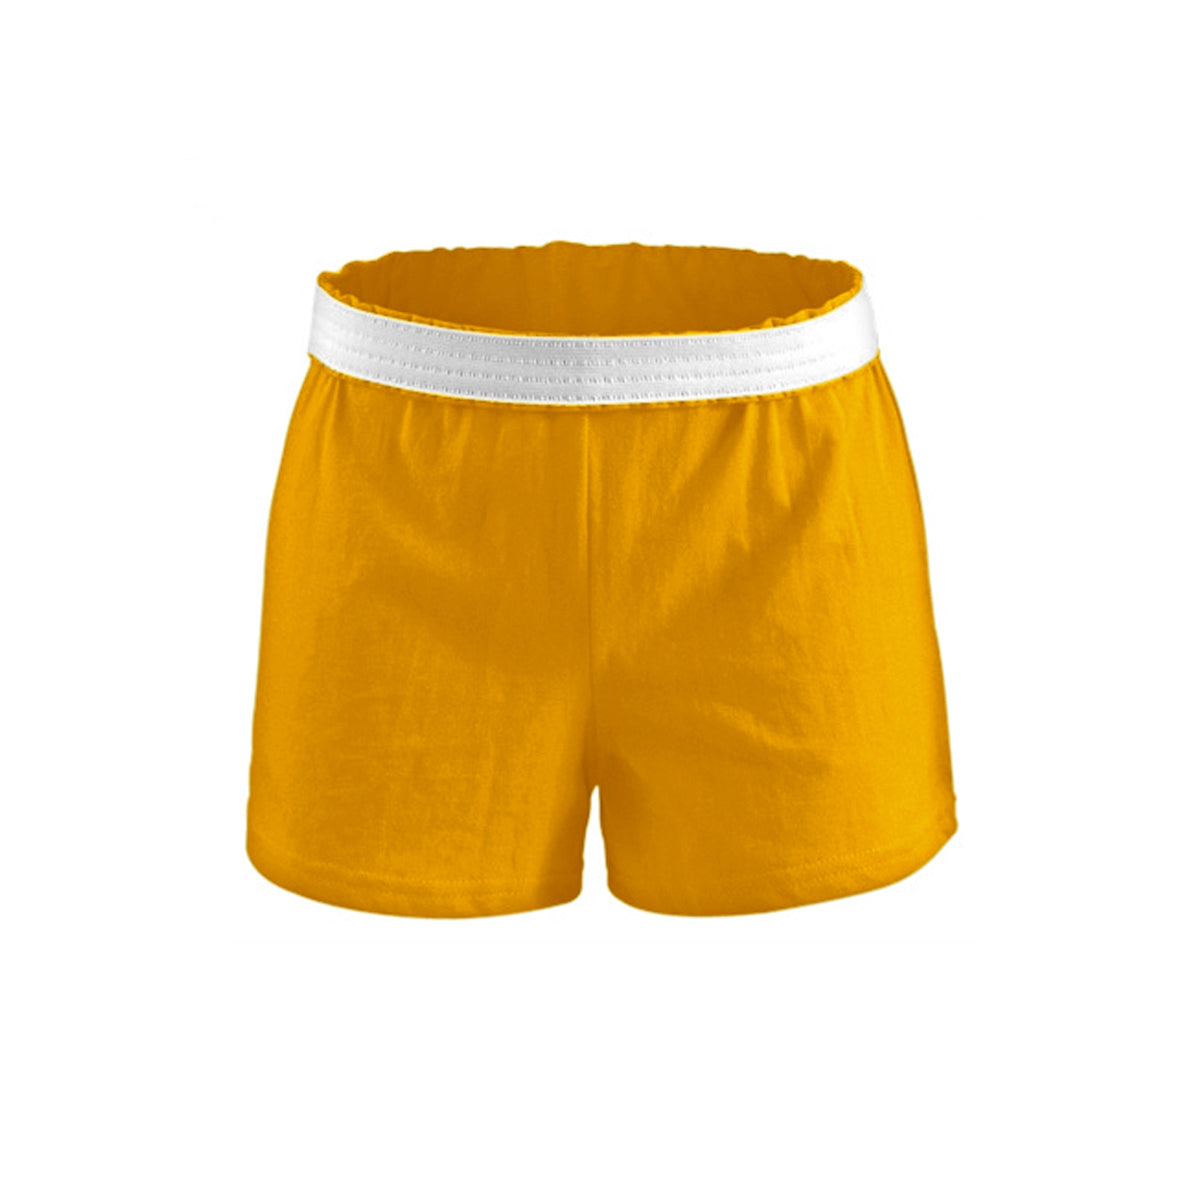 Sussex Middle Design 1 Shorts